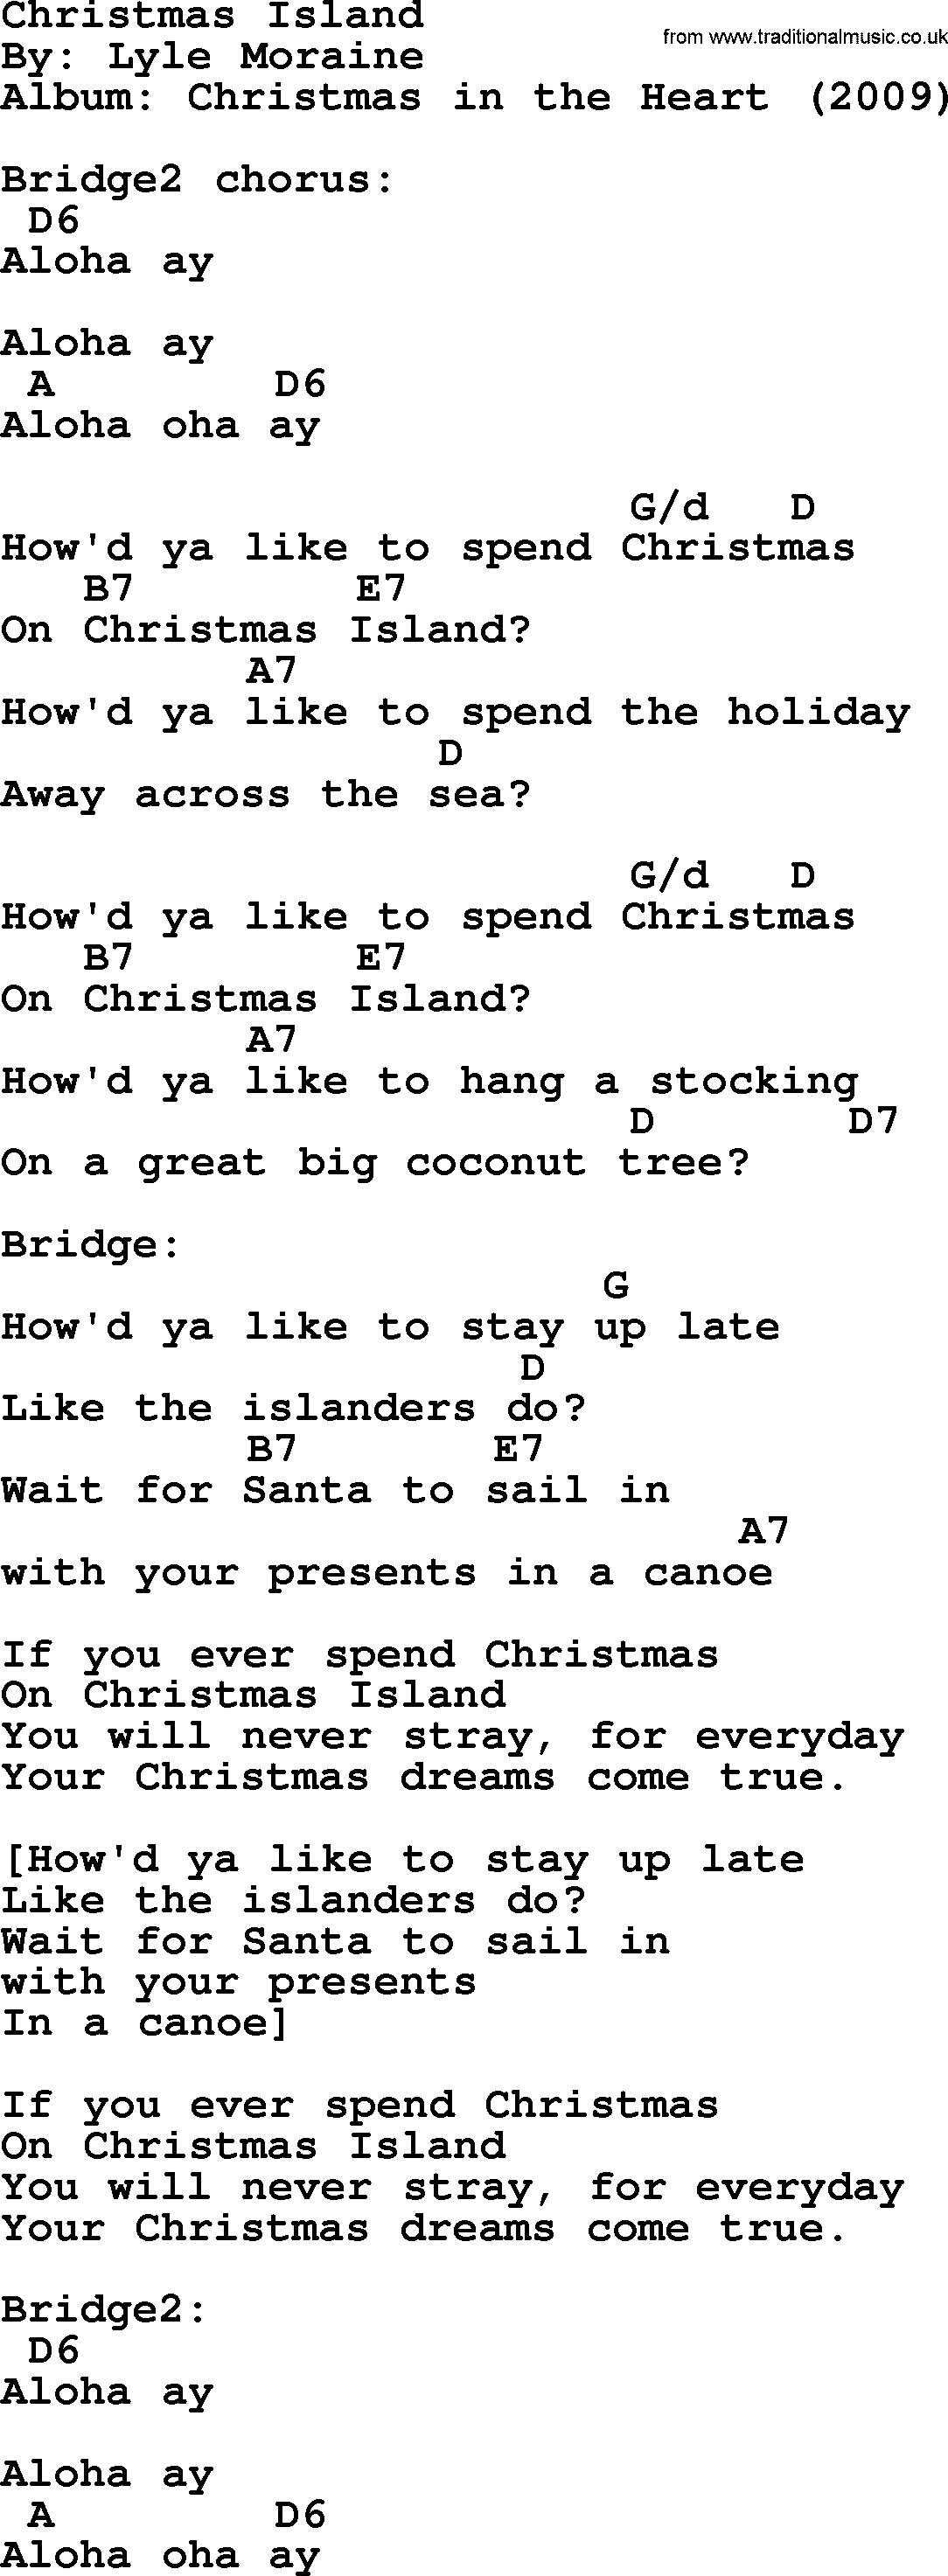 Bob Dylan song, lyrics with chords - Christmas Island